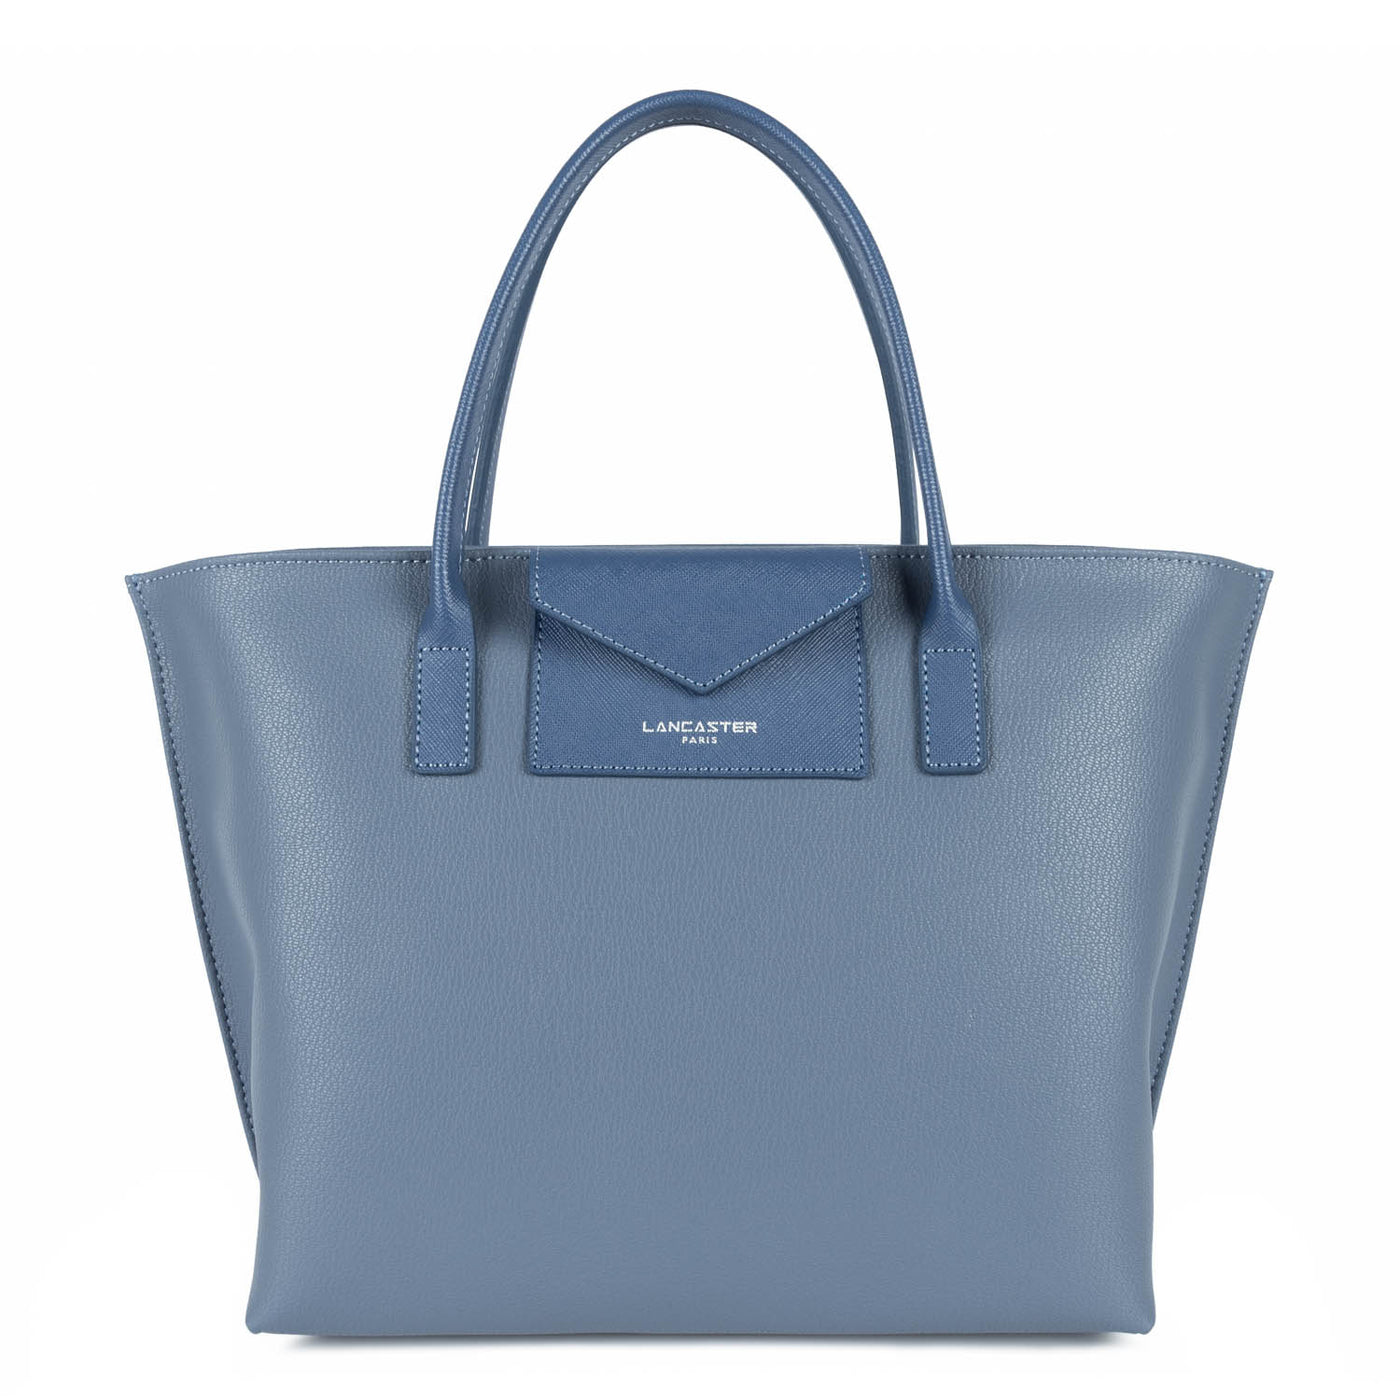 m handbag - maya #couleur_bleu-cendre